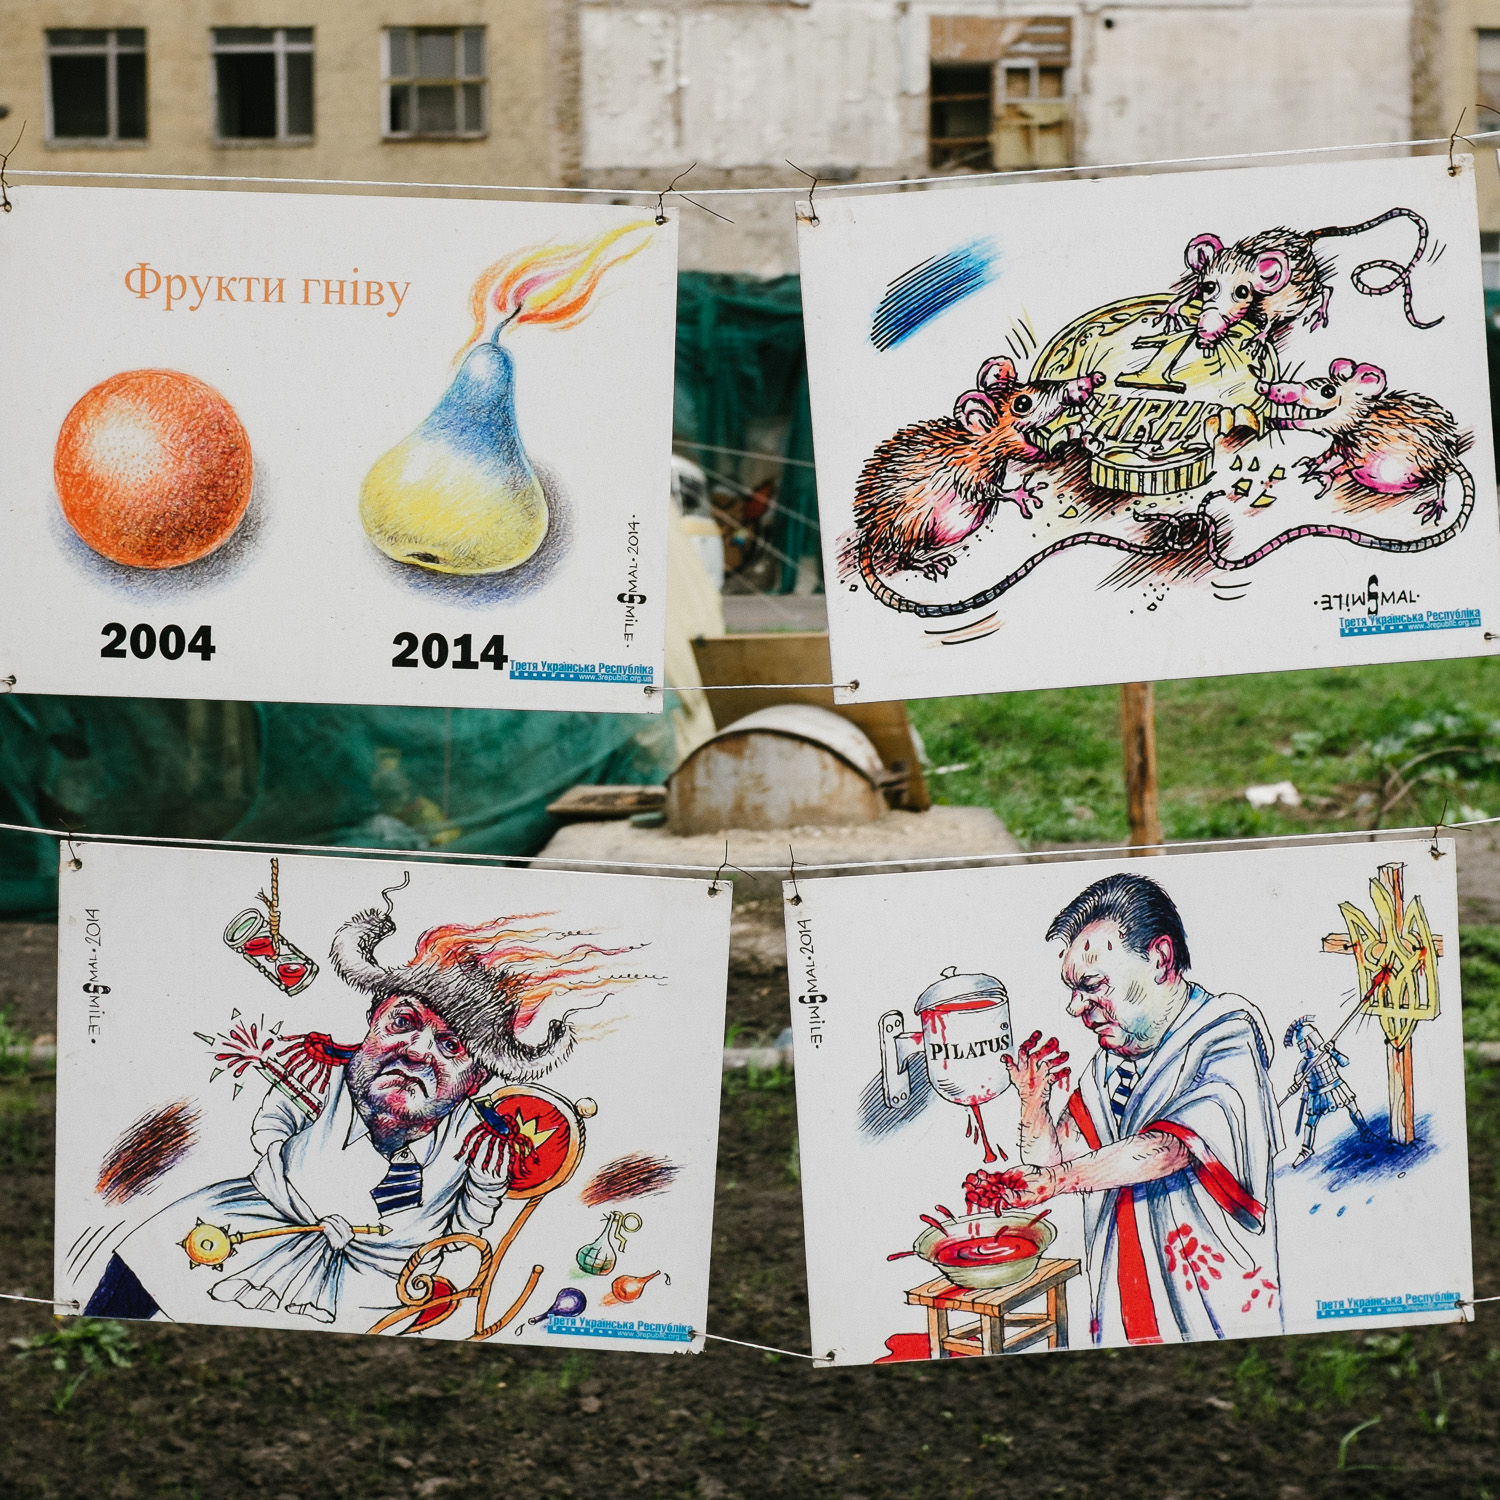  Political cartoons depicting former Ukrainian president Viktor Yanukovych, photographed on Khreshchatyk street, off Independence Square, Kyiv. 